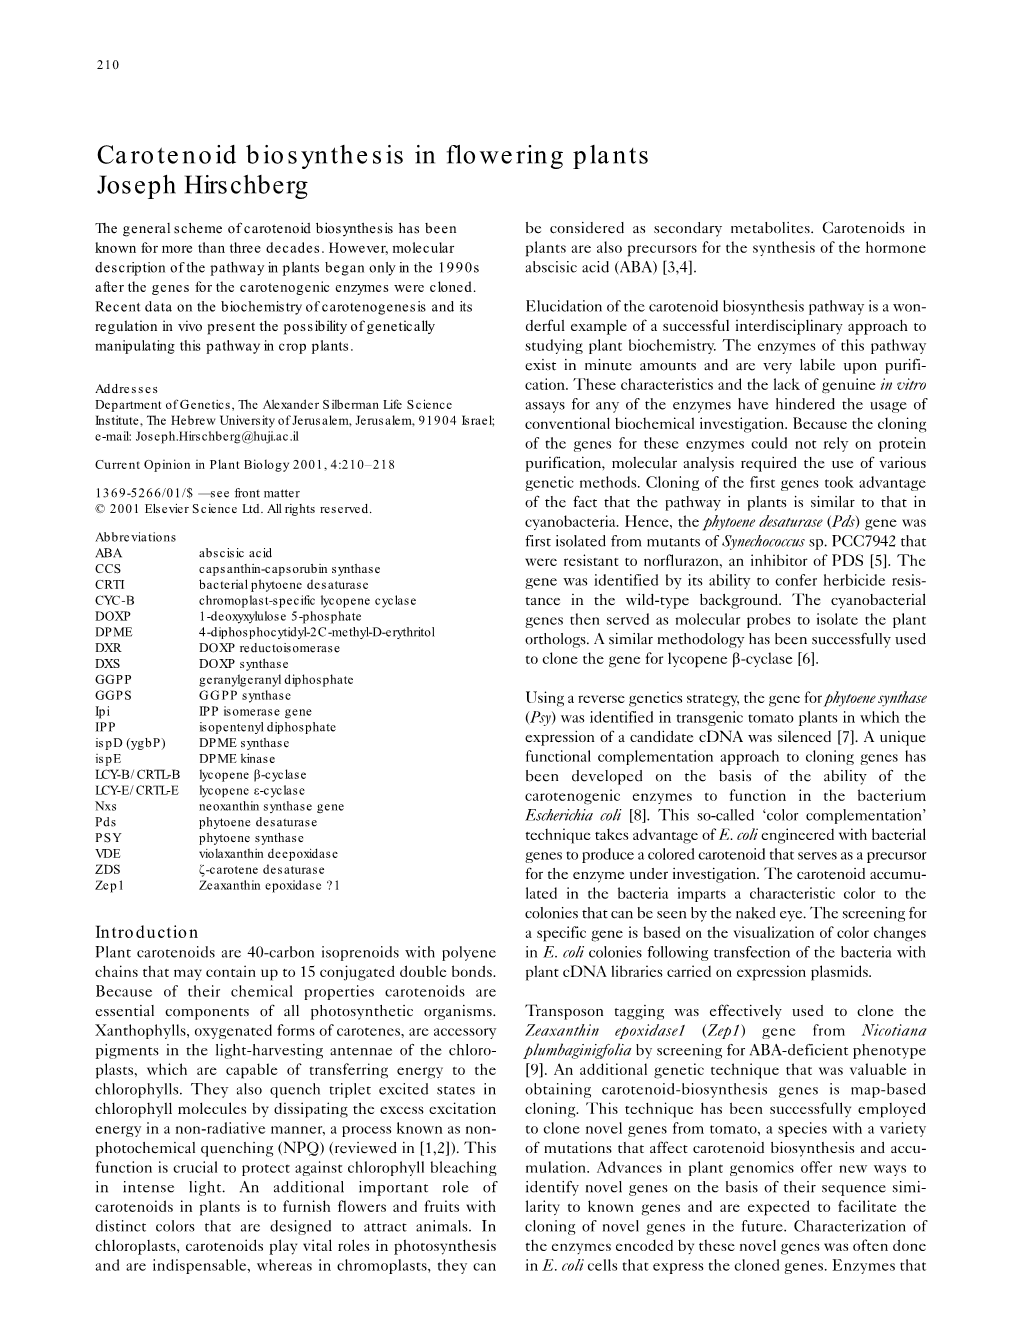 Carotenoid Biosynthesis in Flowering Plants Joseph Hirschberg